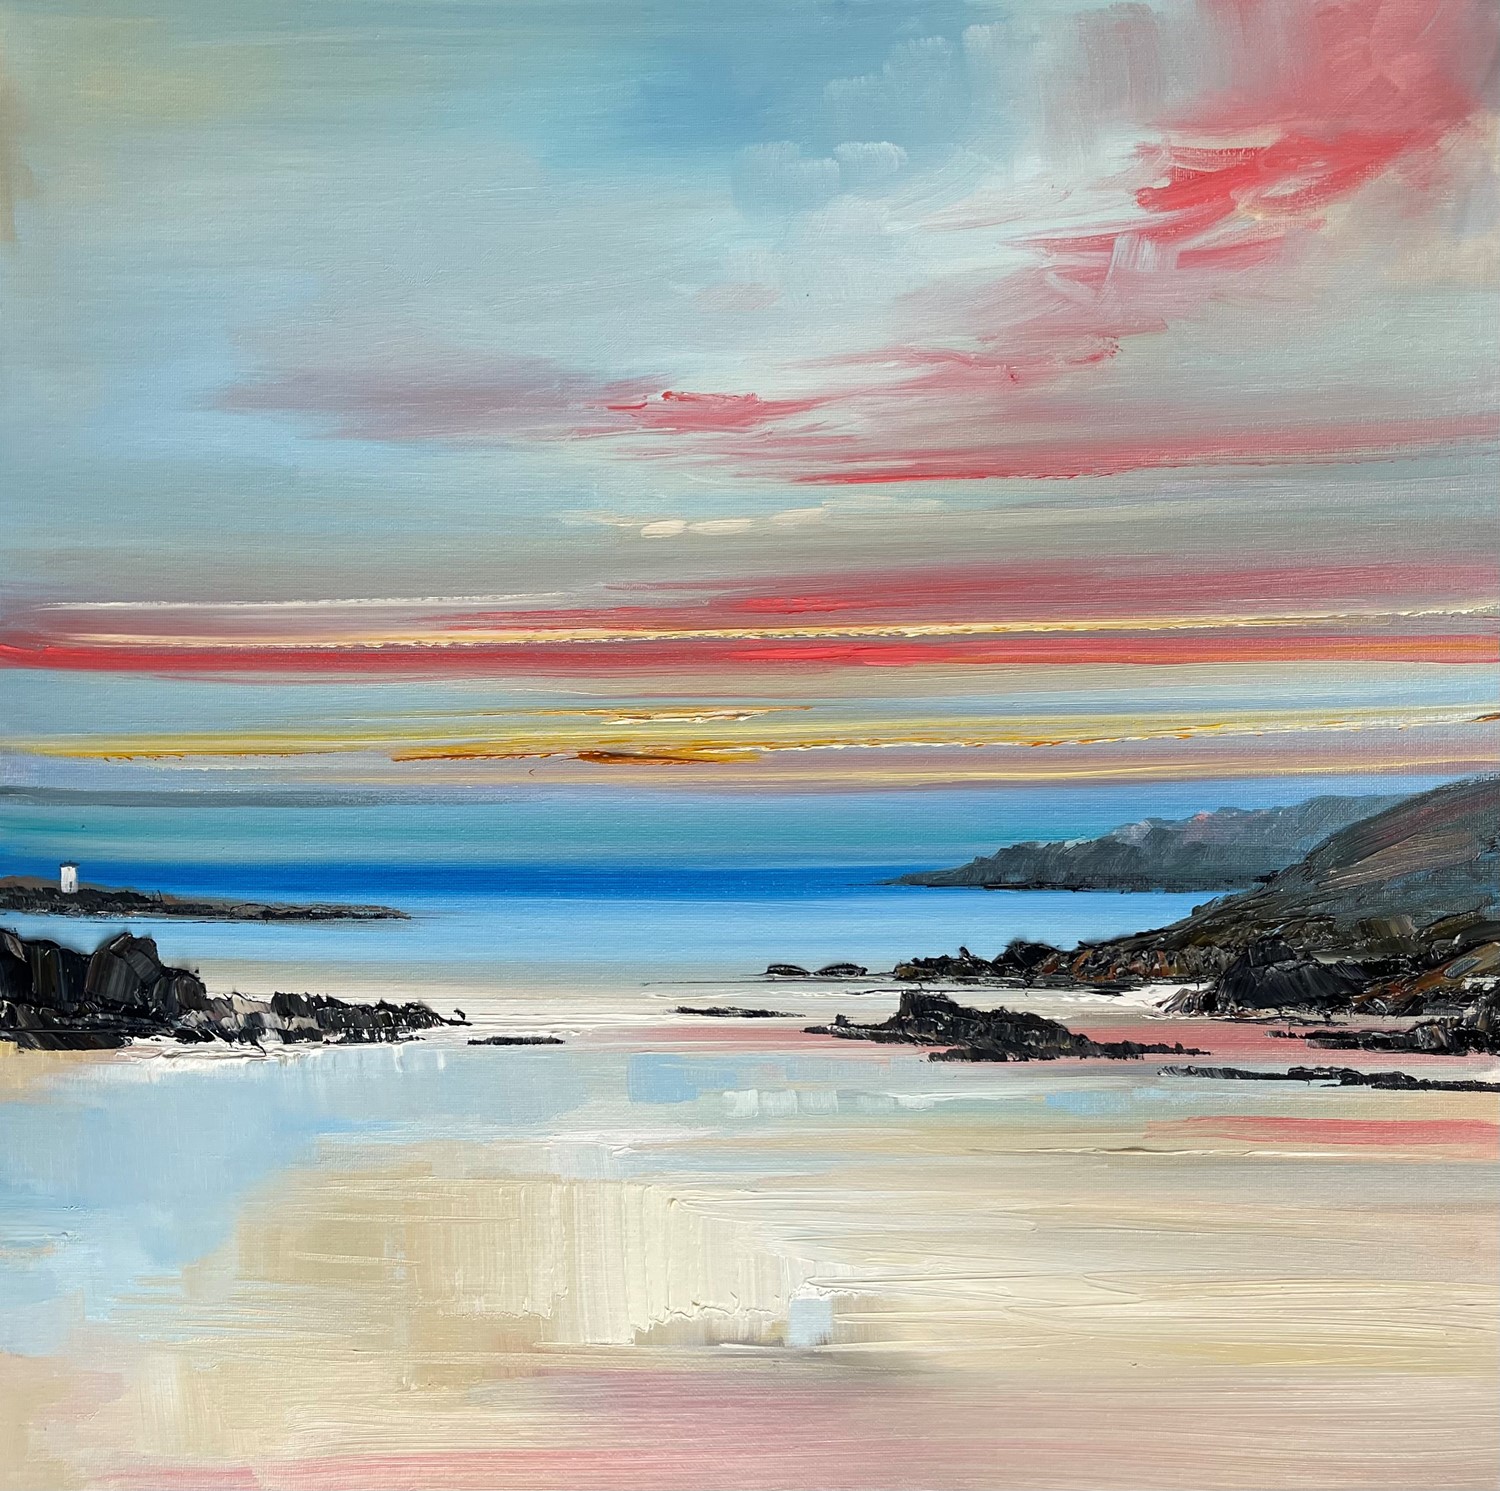 'Singing Sands Sunset' by artist Rosanne Barr